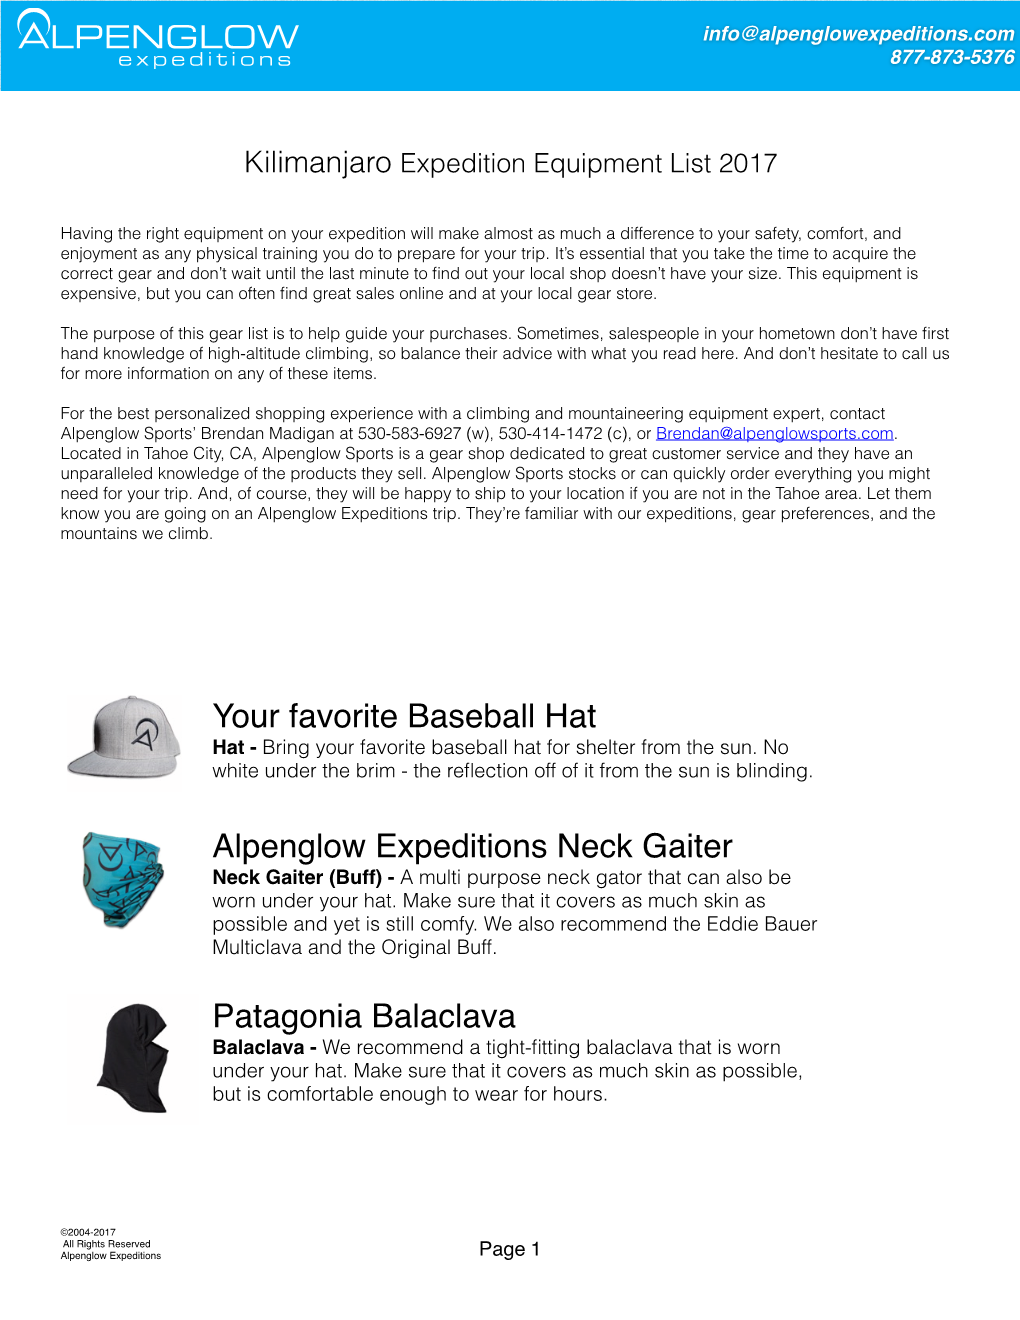 Kilimanjaro Equip List 2017